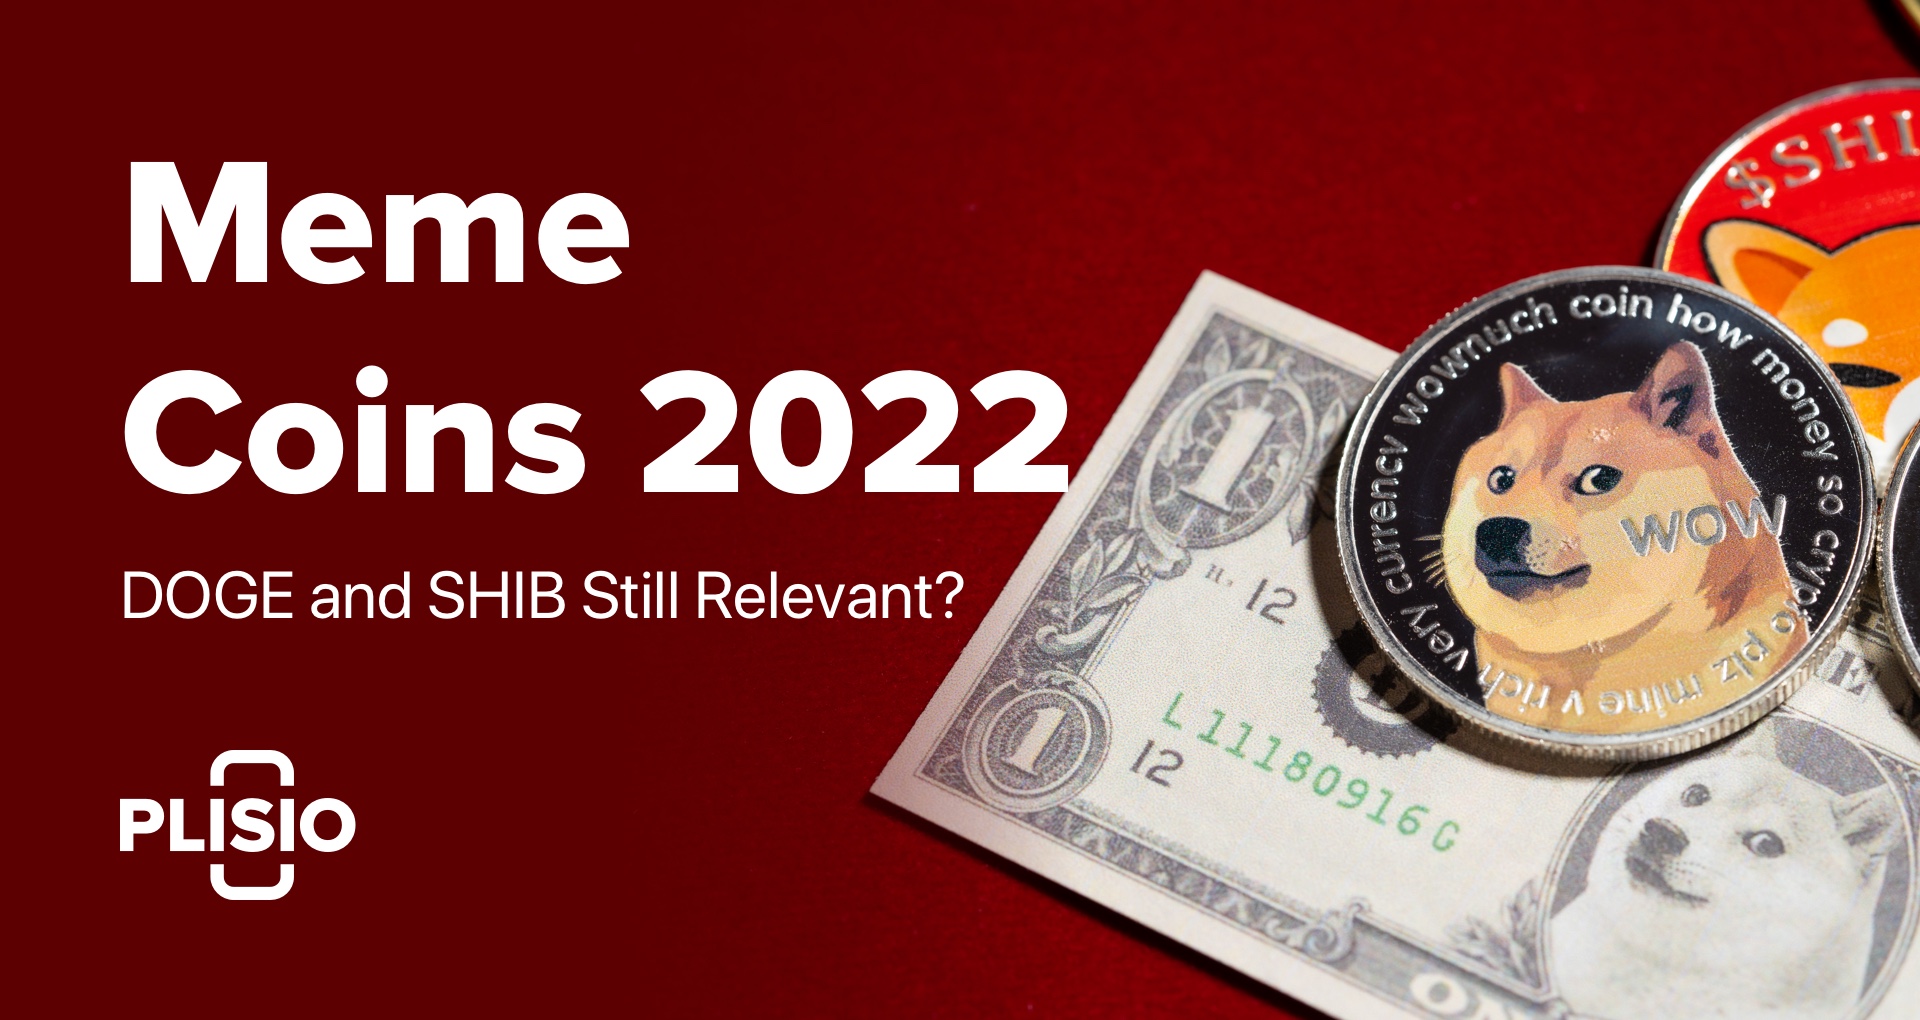 Meme Coins en 2022: ¿Dogecoin y Shiba Inu siguen siendo relevantes?